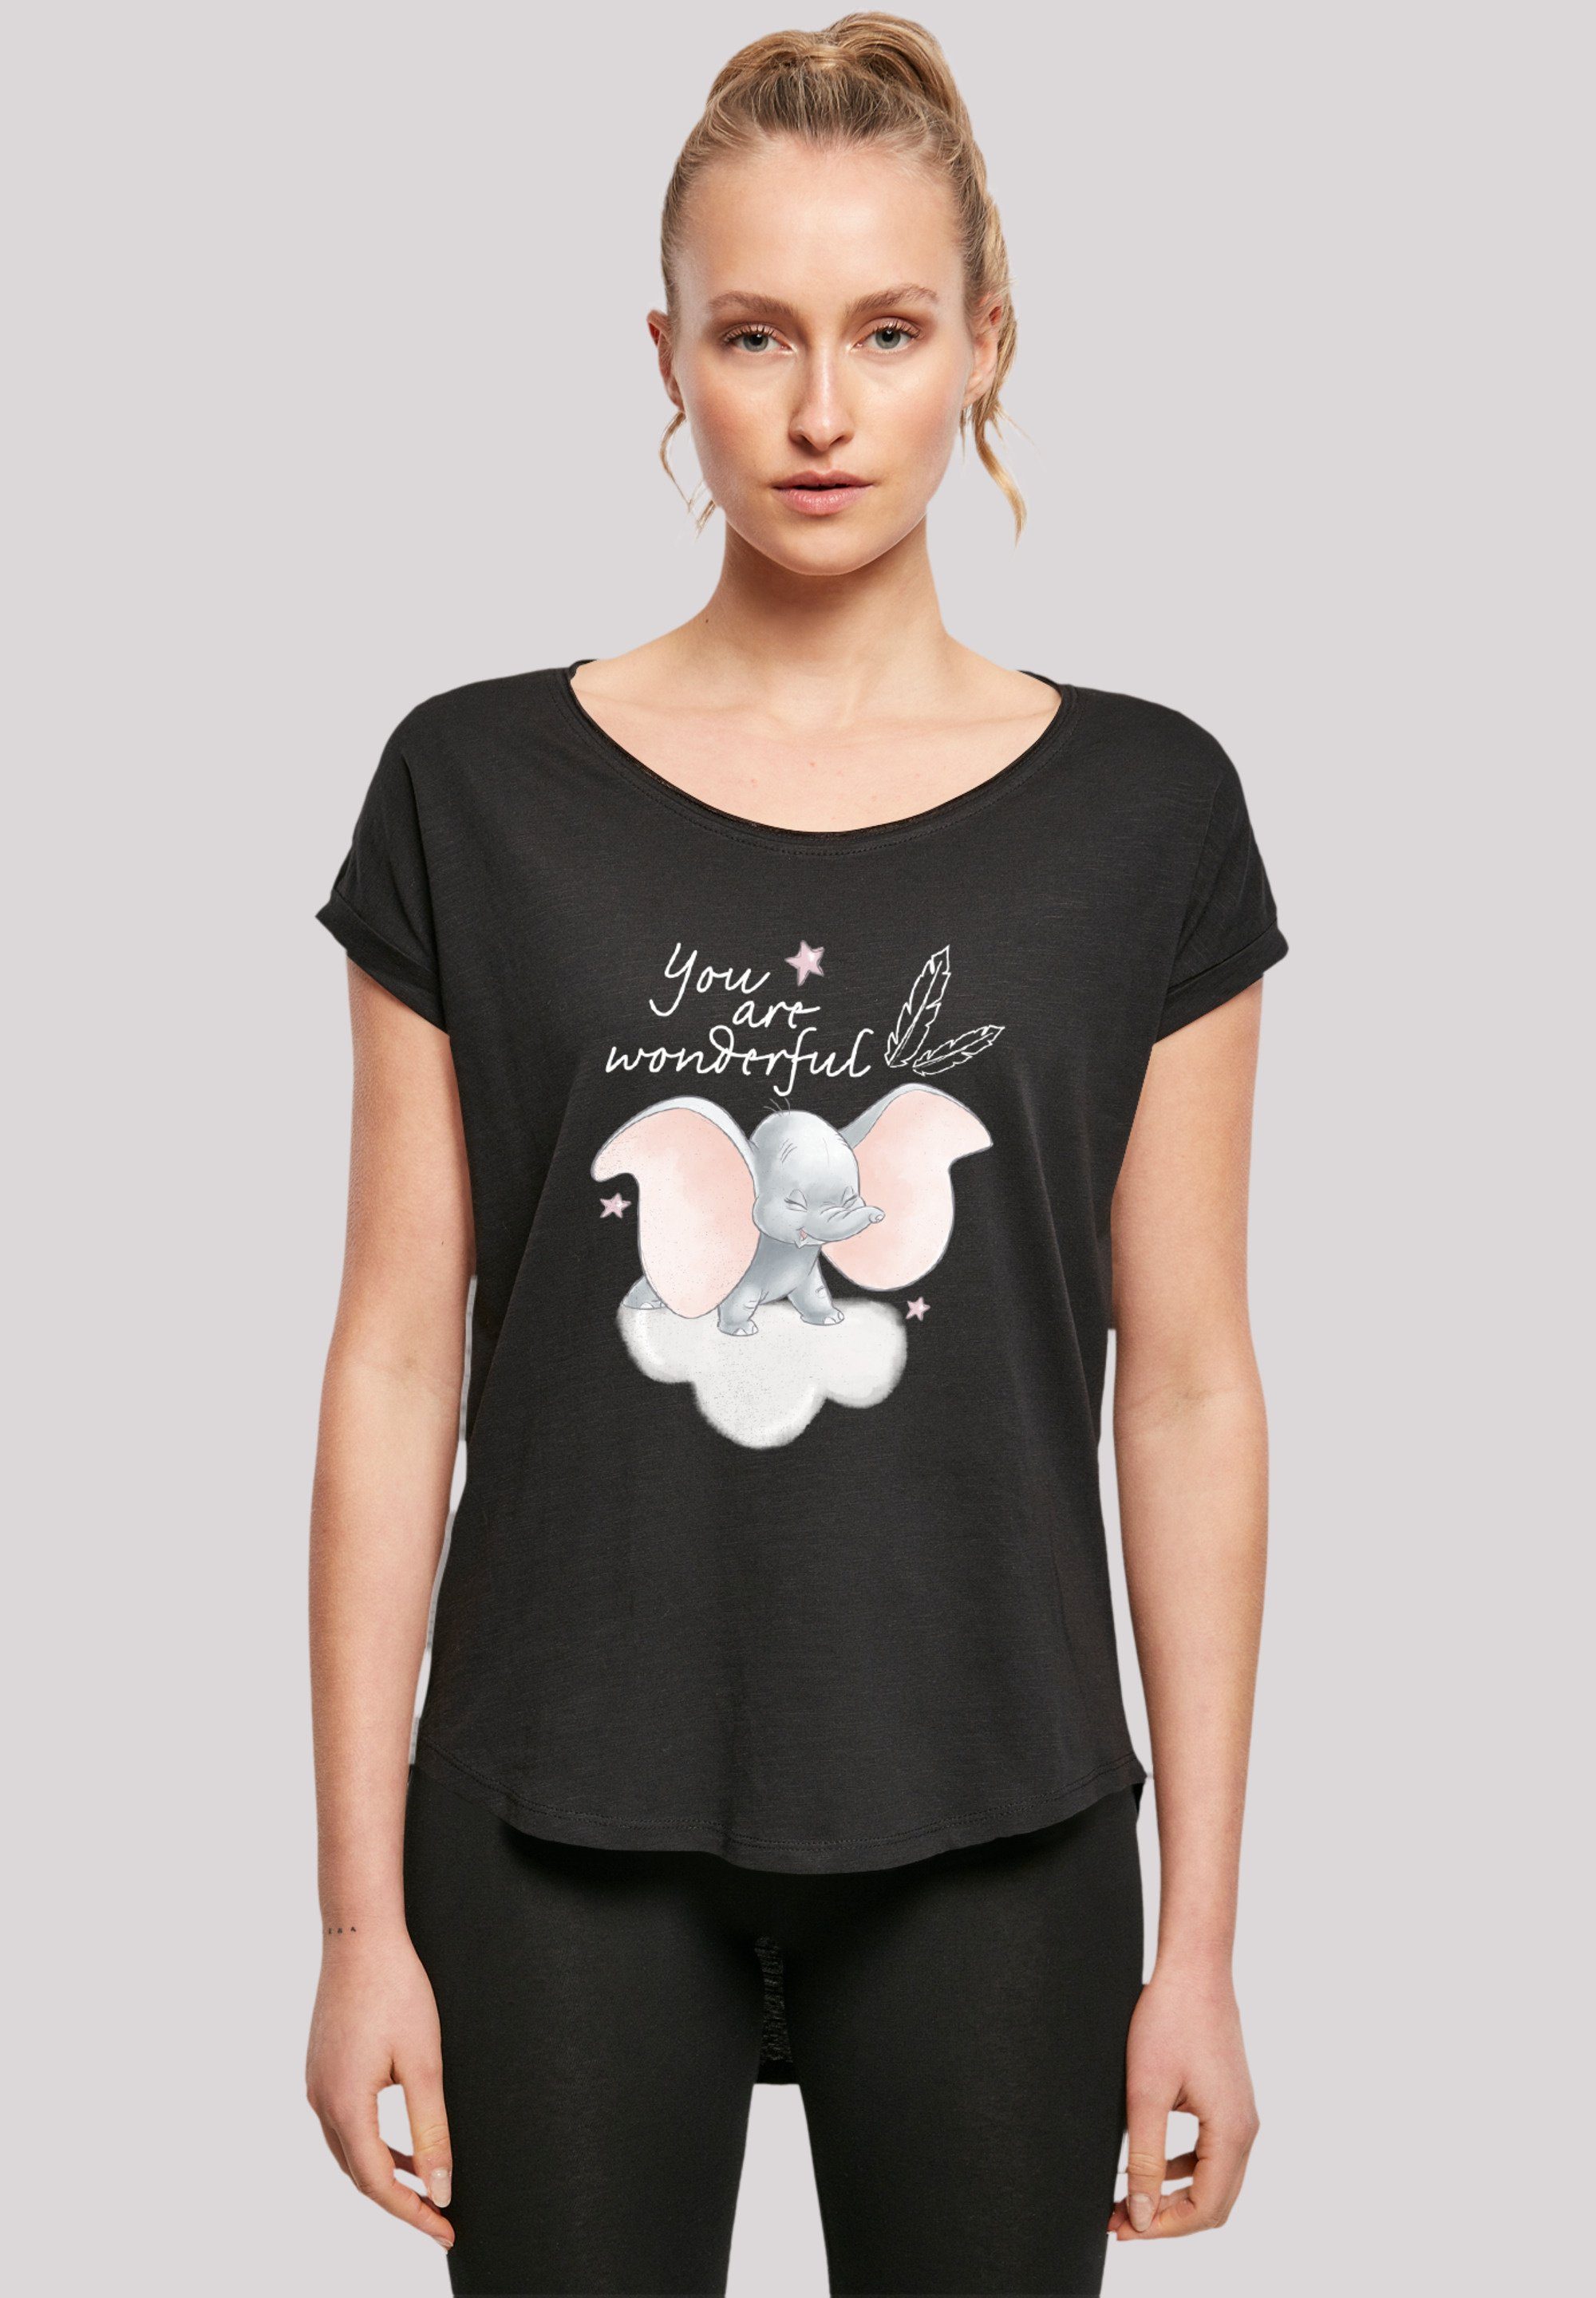 Dumbo Disney Premium Wonderful T-Shirt You F4NT4STIC Qualität Are